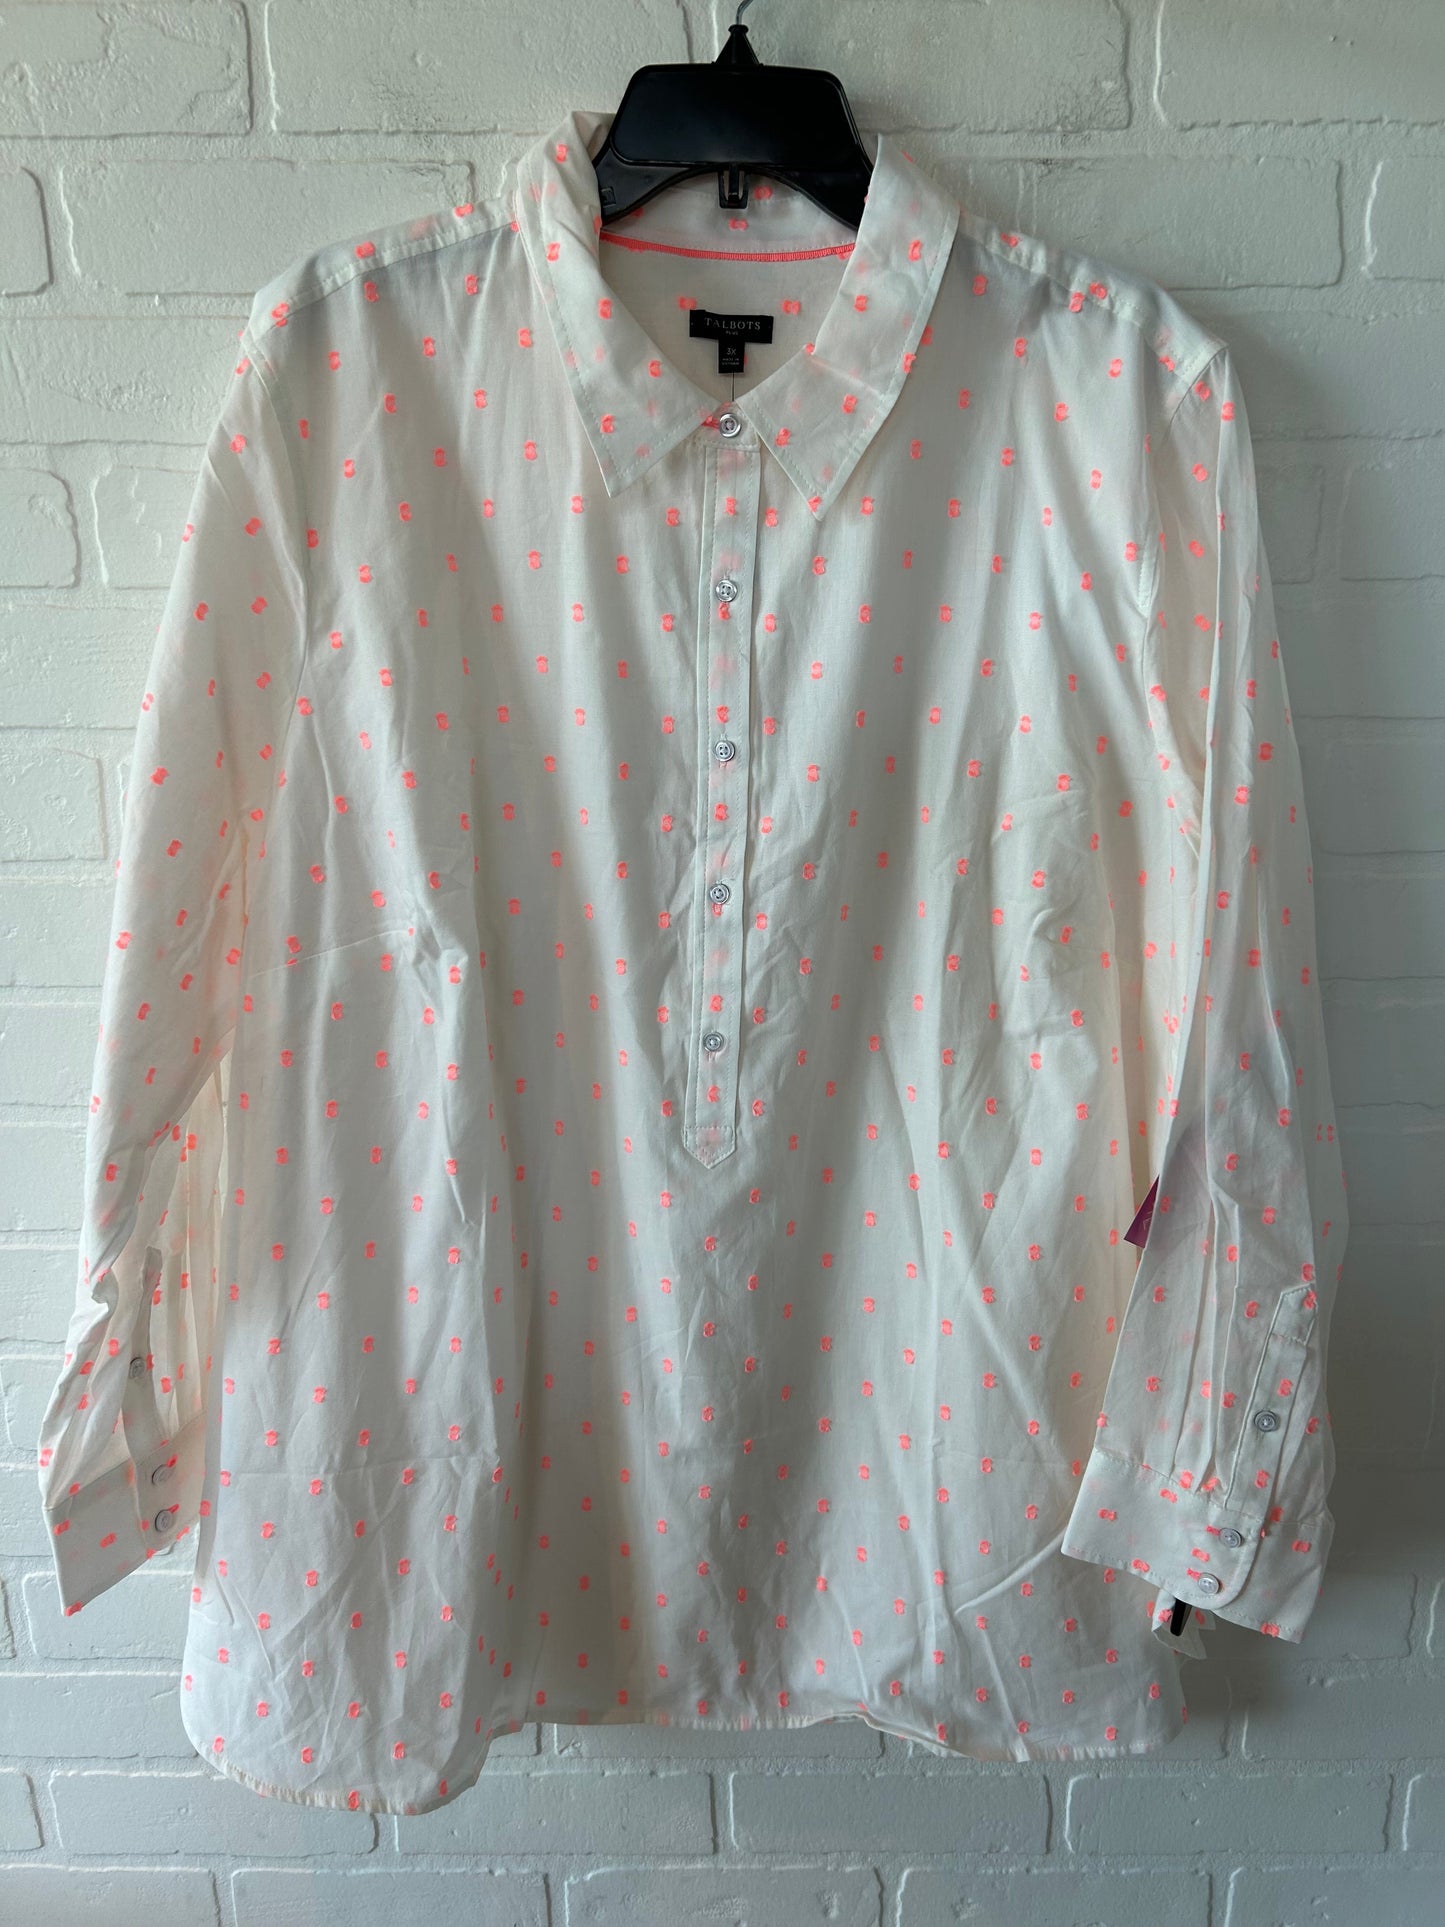 Pink & White Blouse Long Sleeve Talbots, Size 3x